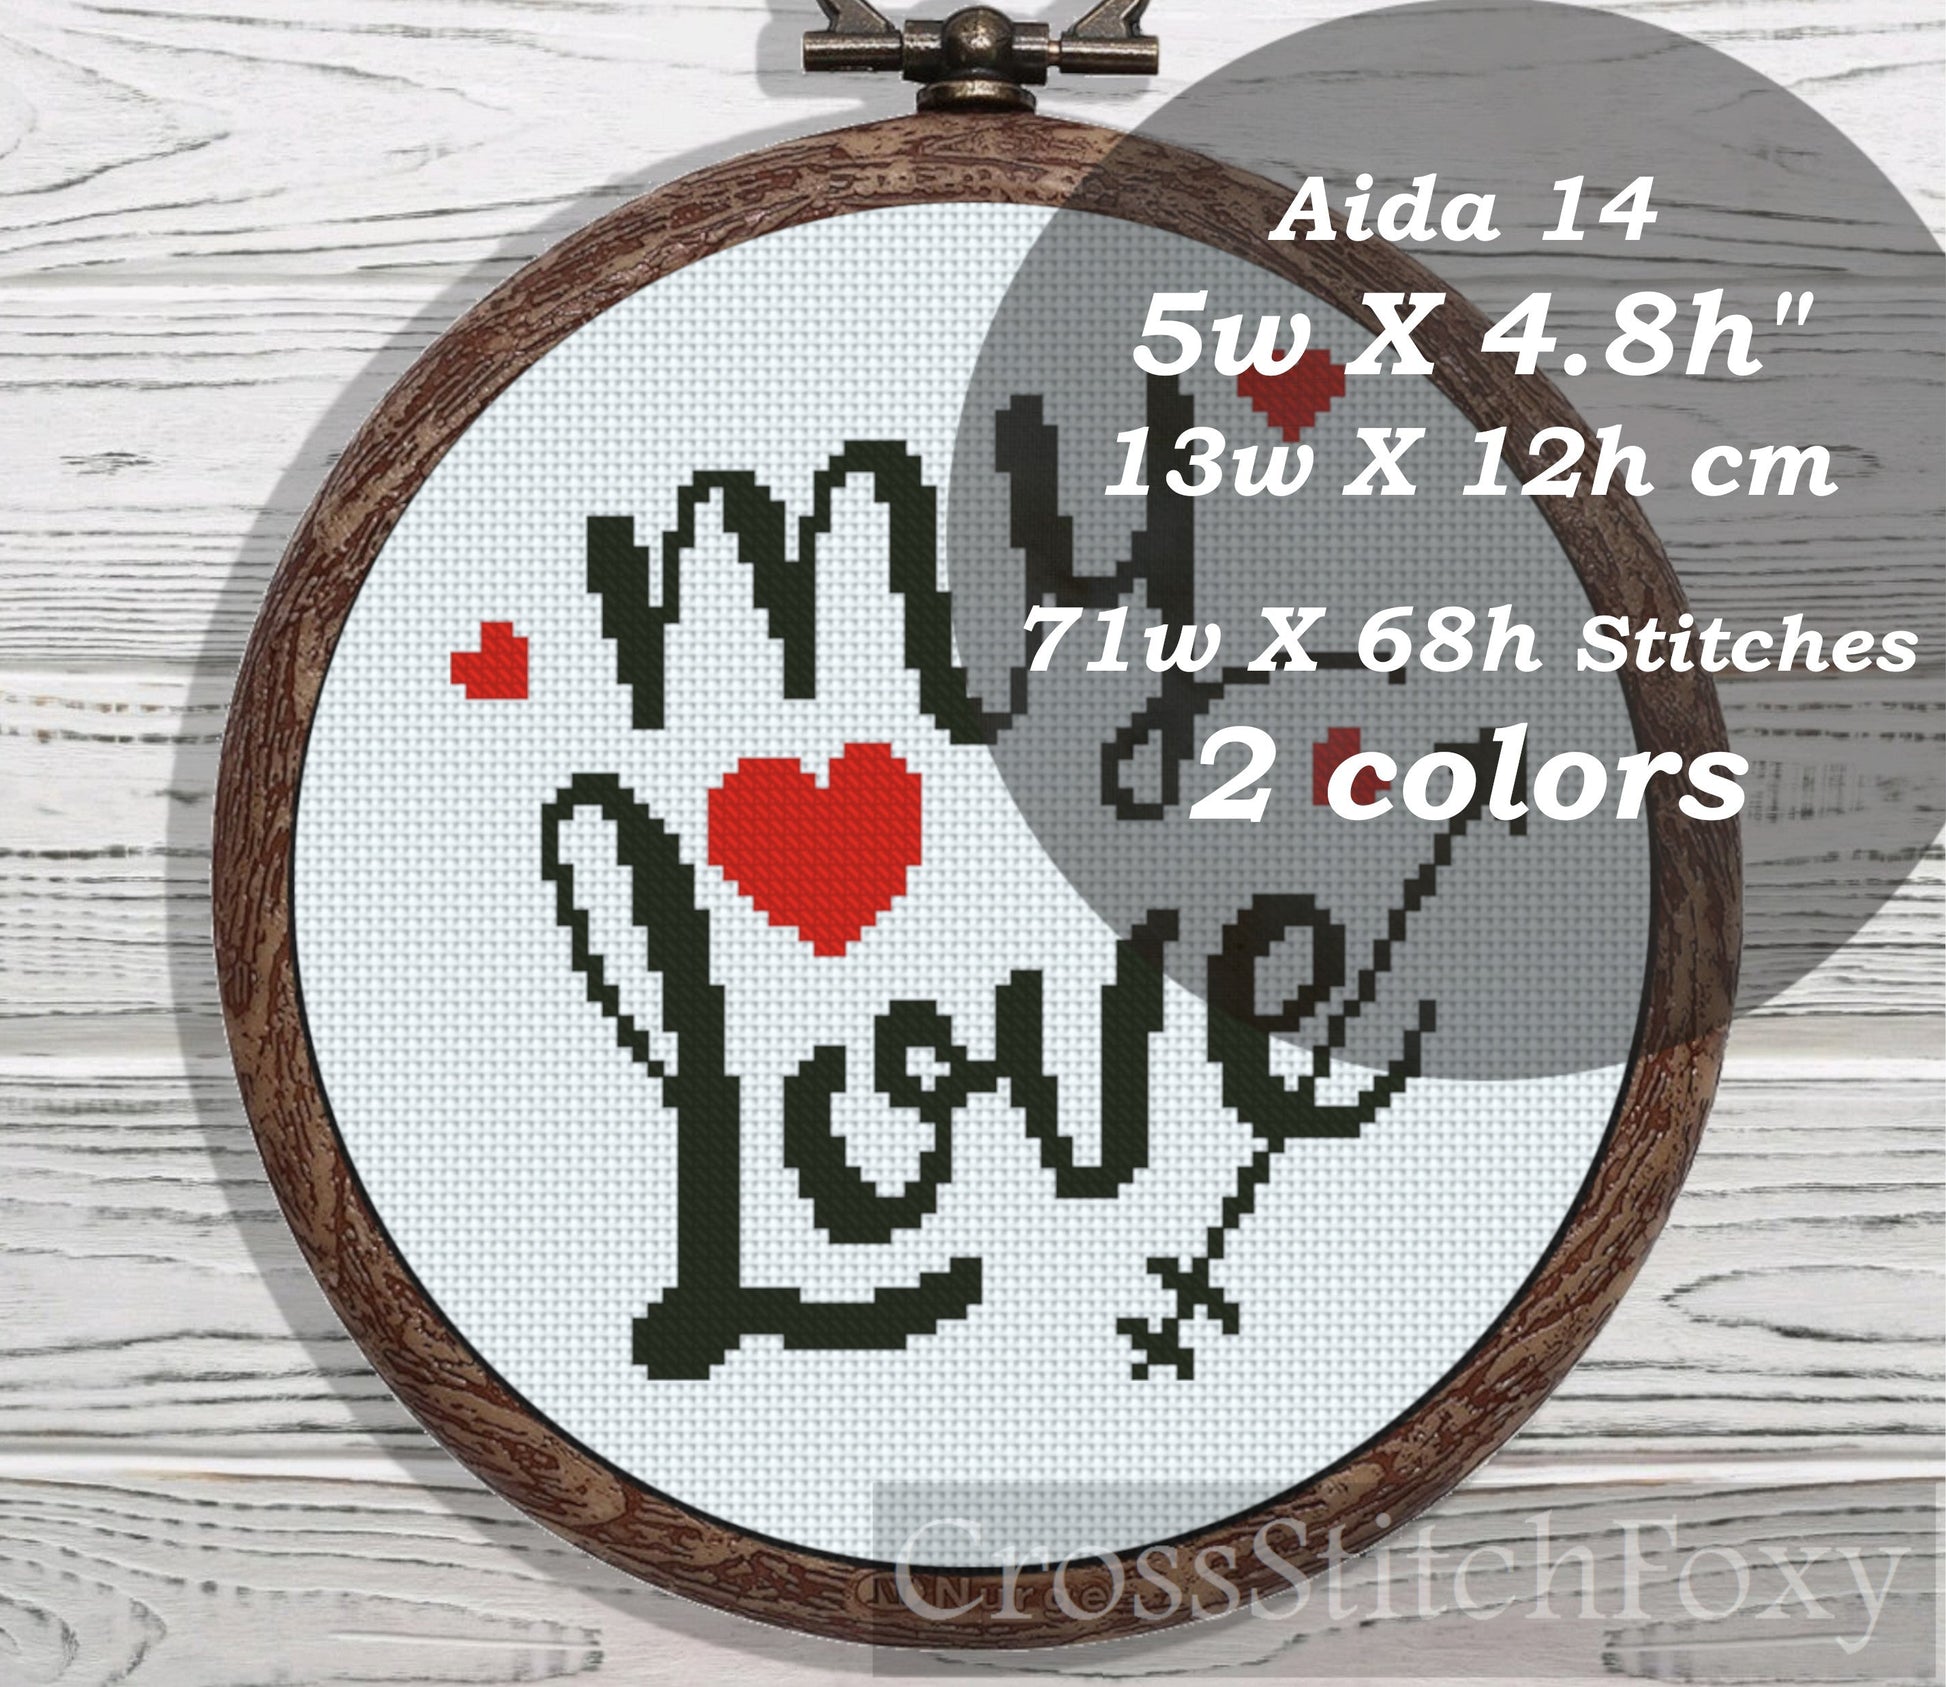 My Love cross stitch pattern